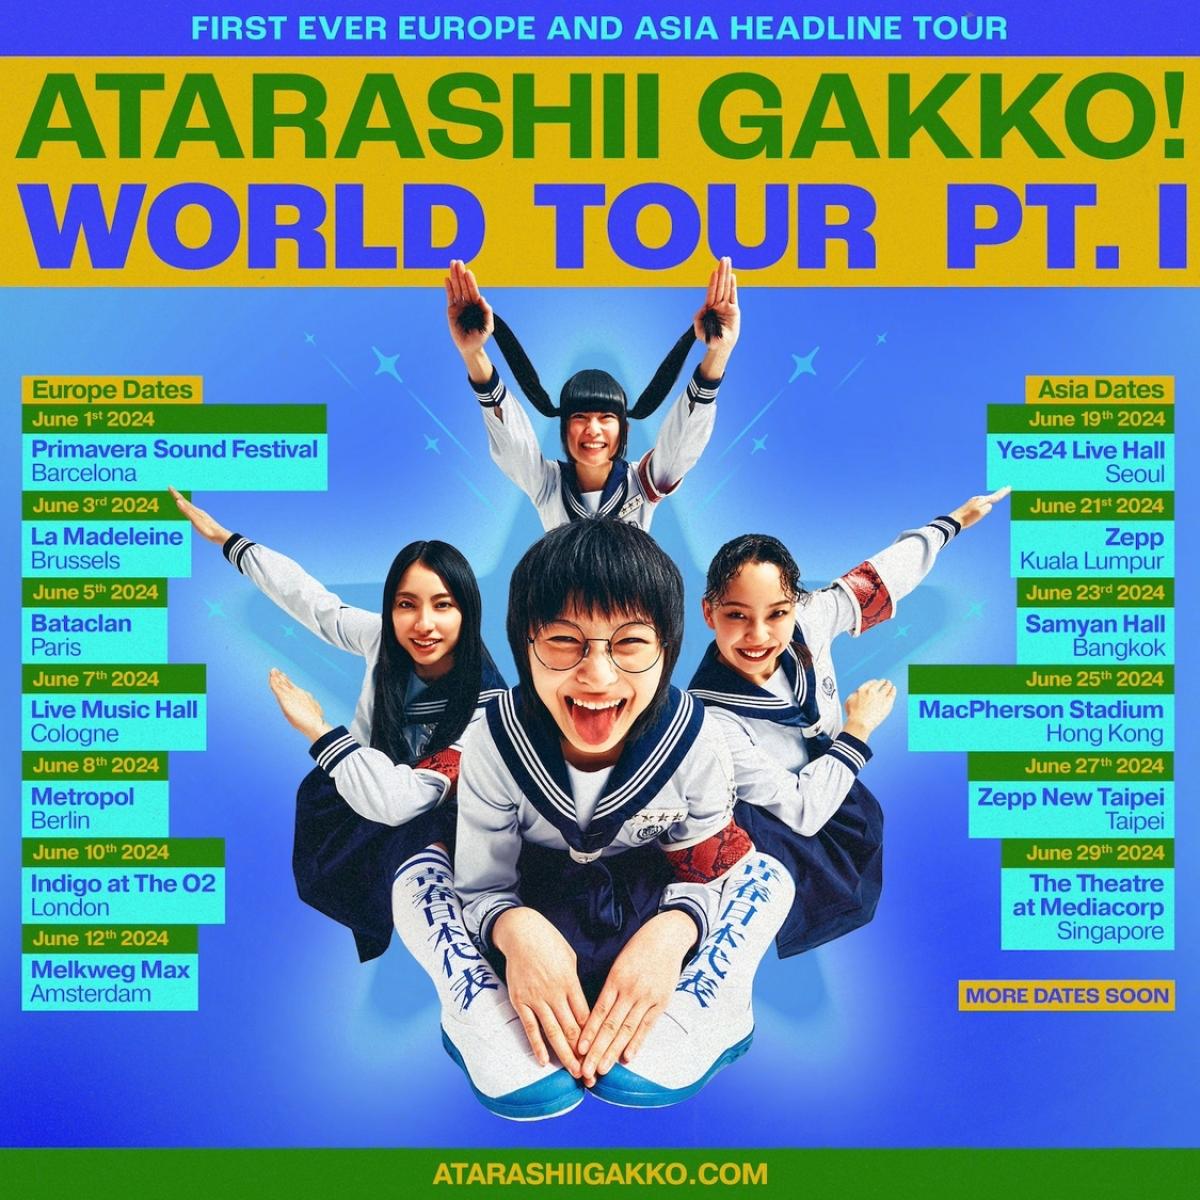 Atarashii Gakko! at Melkweg Tickets